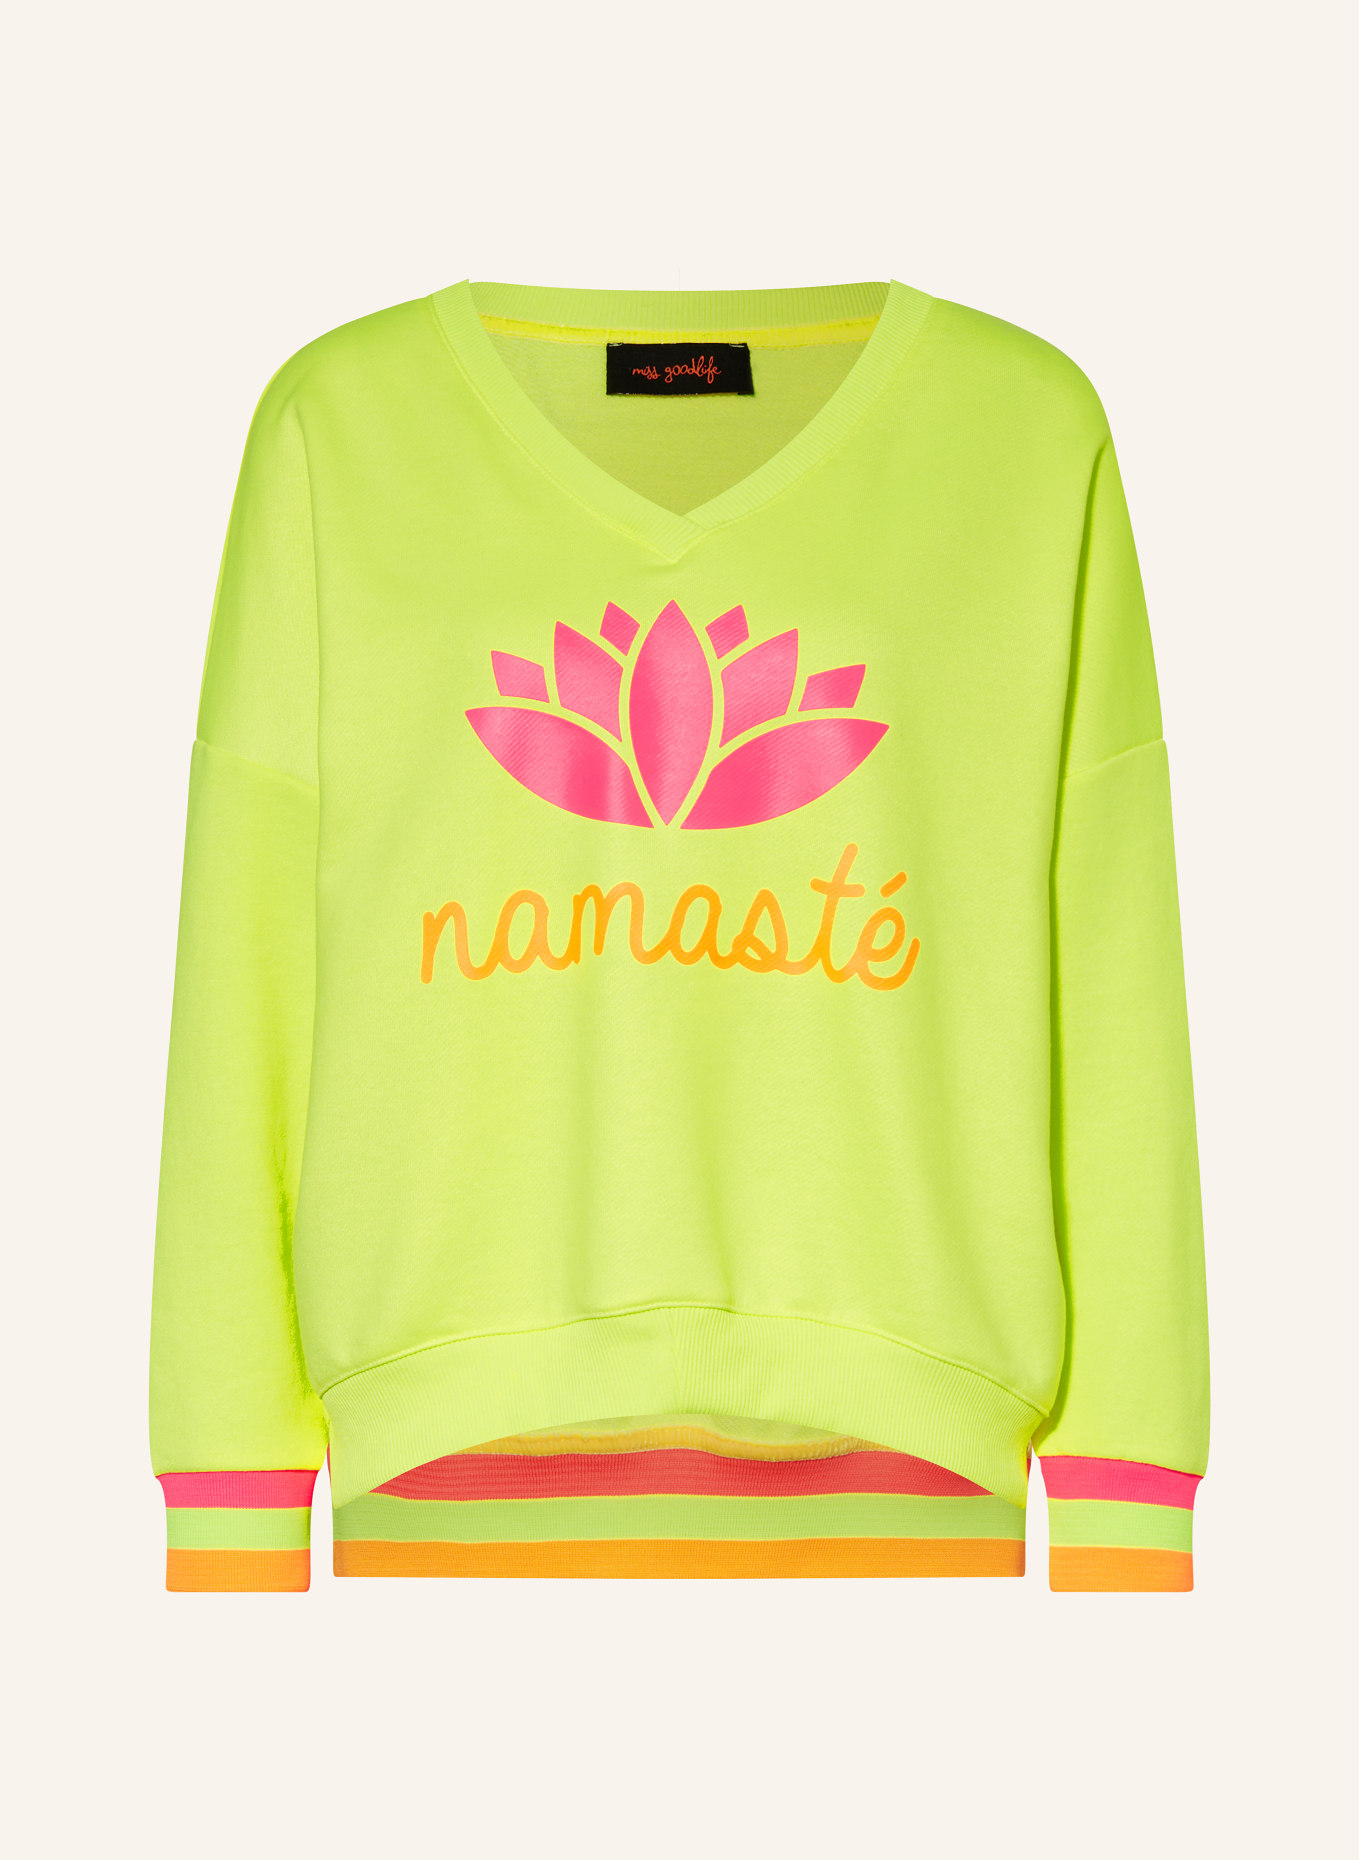 miss goodlife Sweatshirt, Color: NEON YELLOW/ NEON PINK/ NEON ORANGE (Image 1)